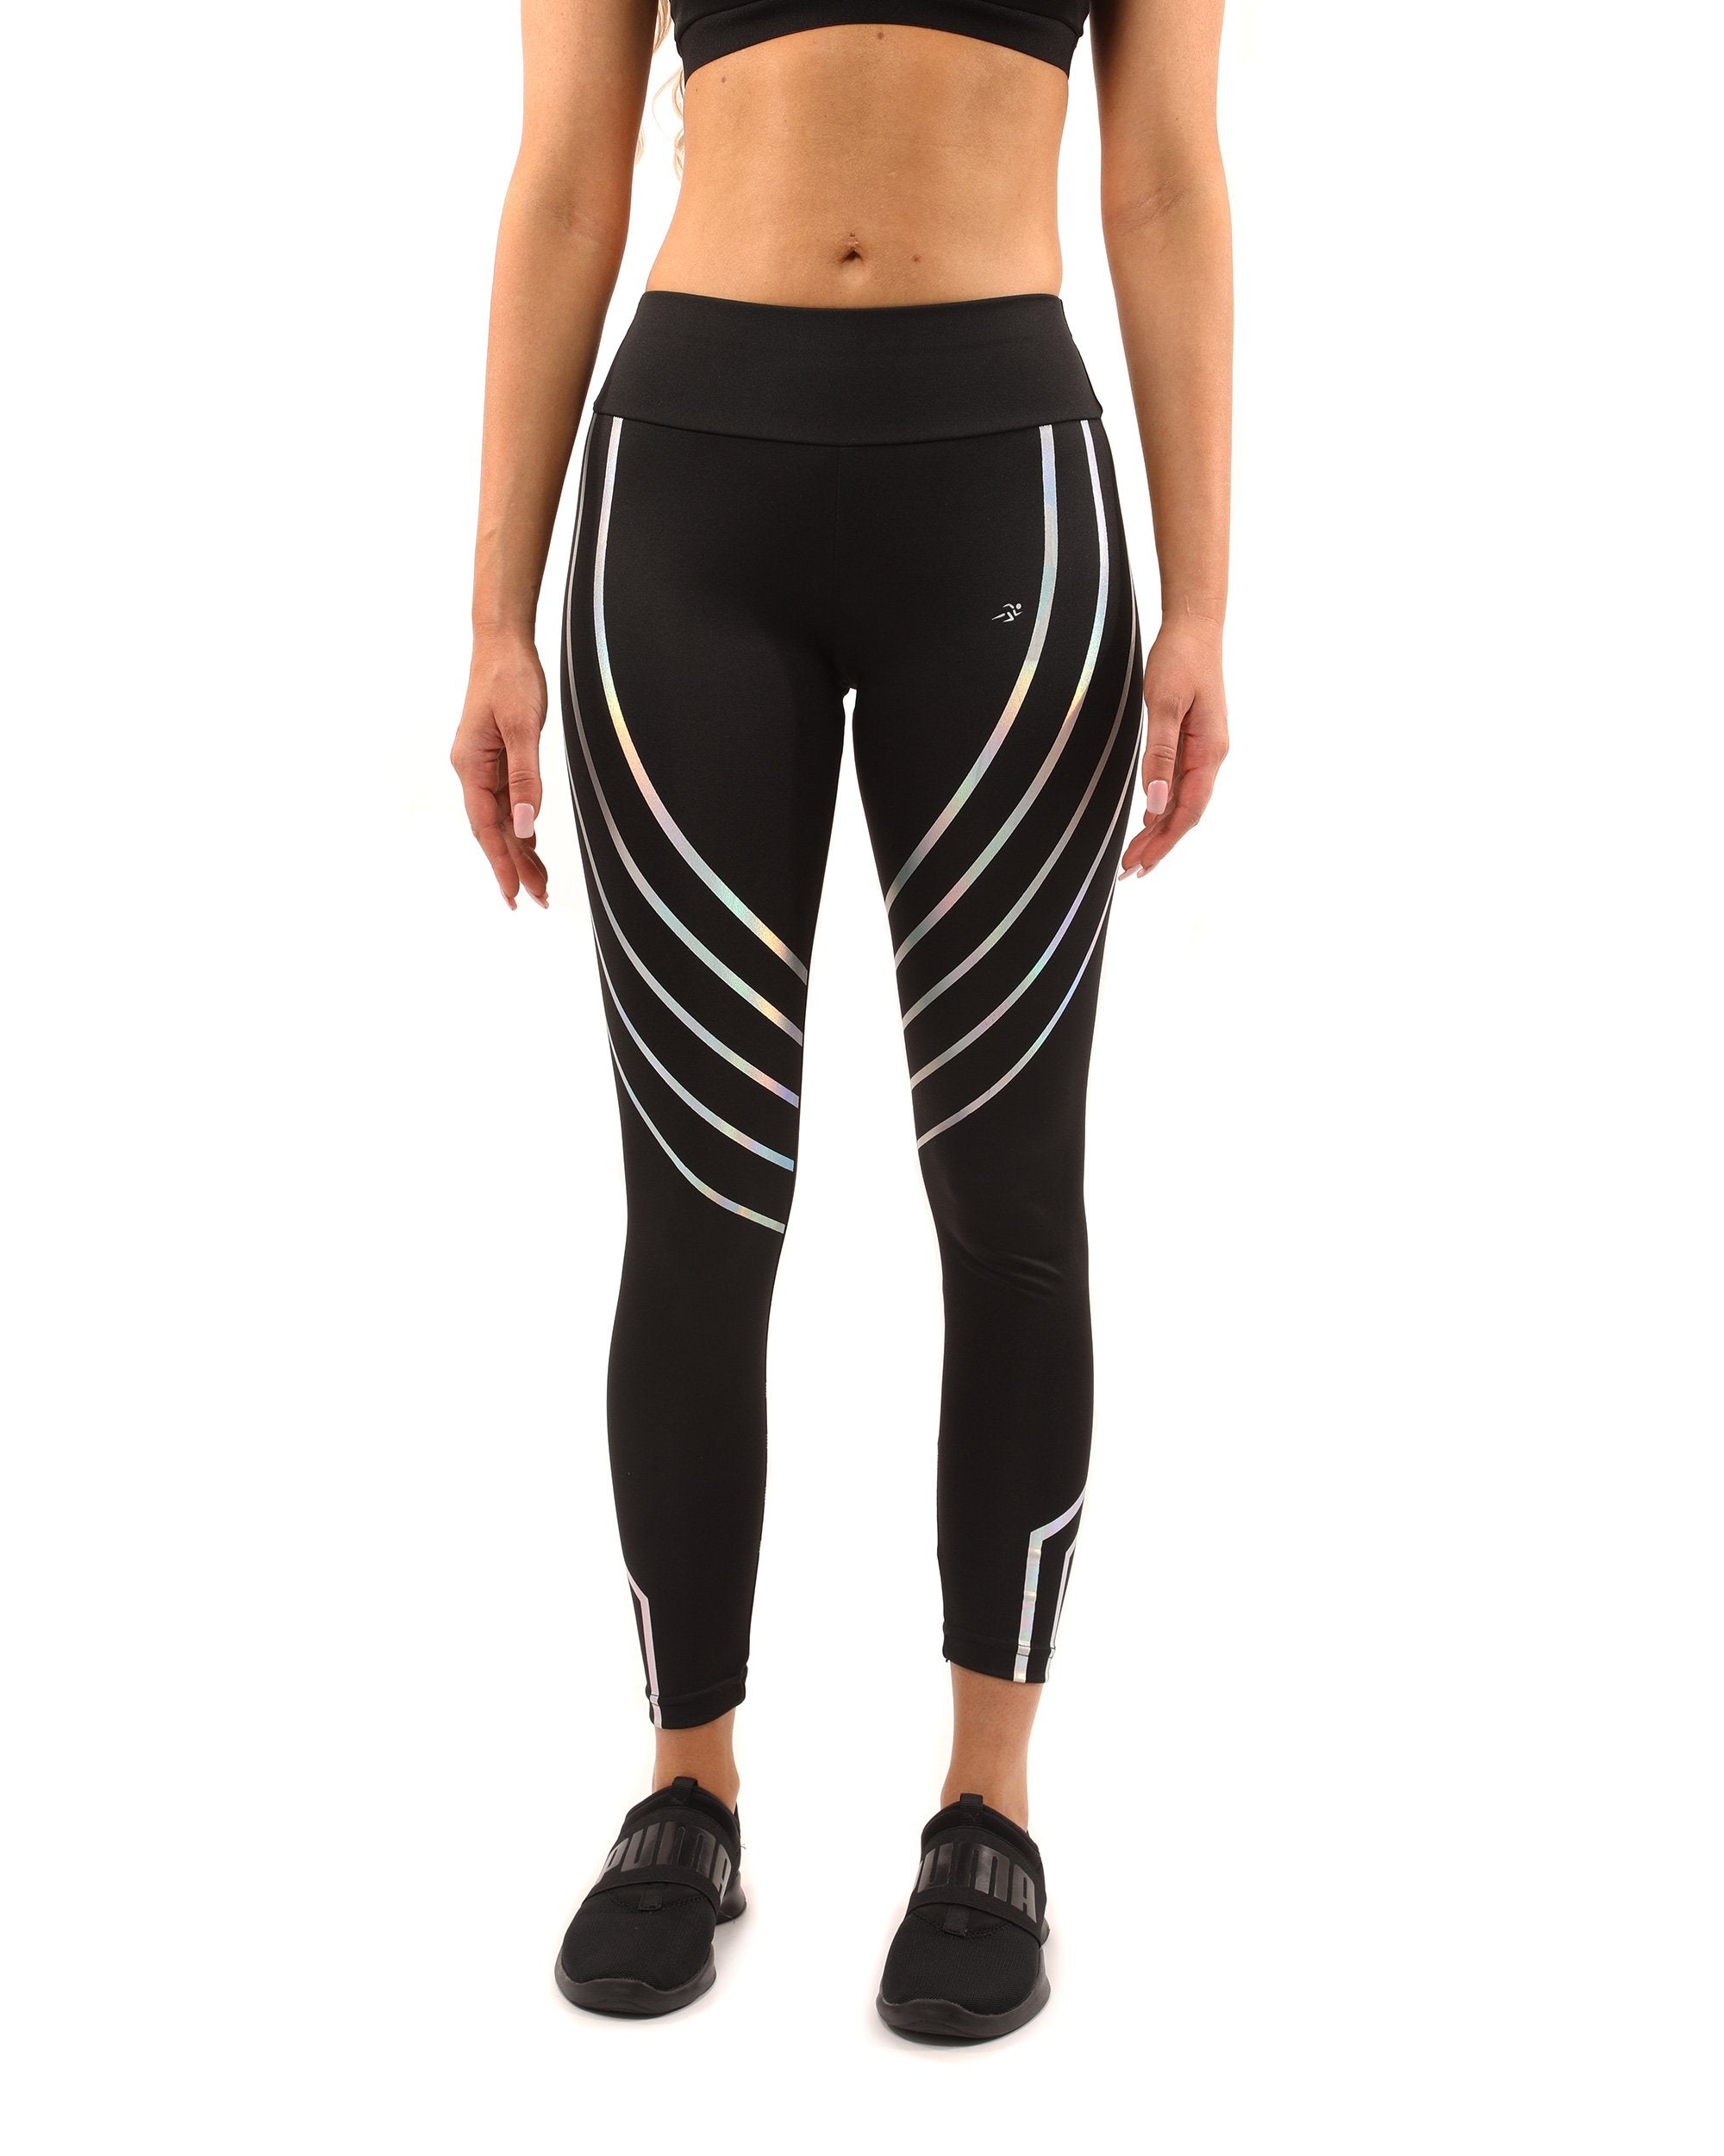 Spyder Activewear Women's Workout Leggings Size Large NWT Orig $88